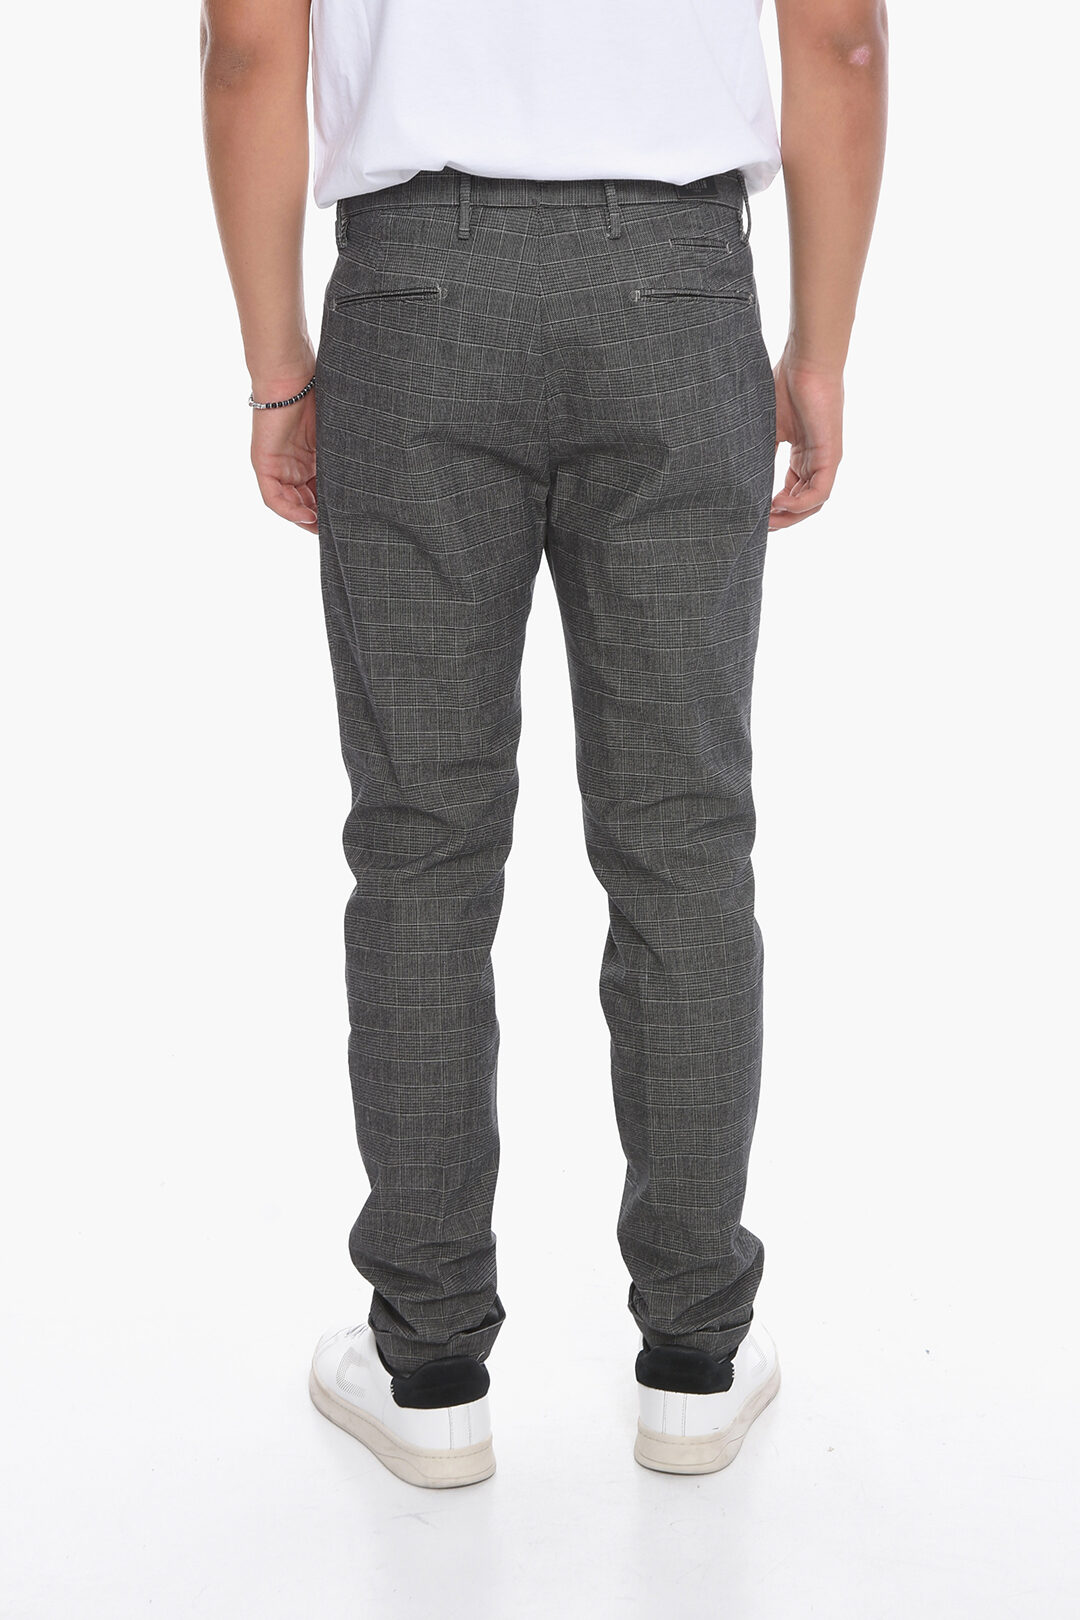 Mens Plaid Stripe Lace-Up Casual Pants Slim Fit Check Trousers Business  Pants | eBay